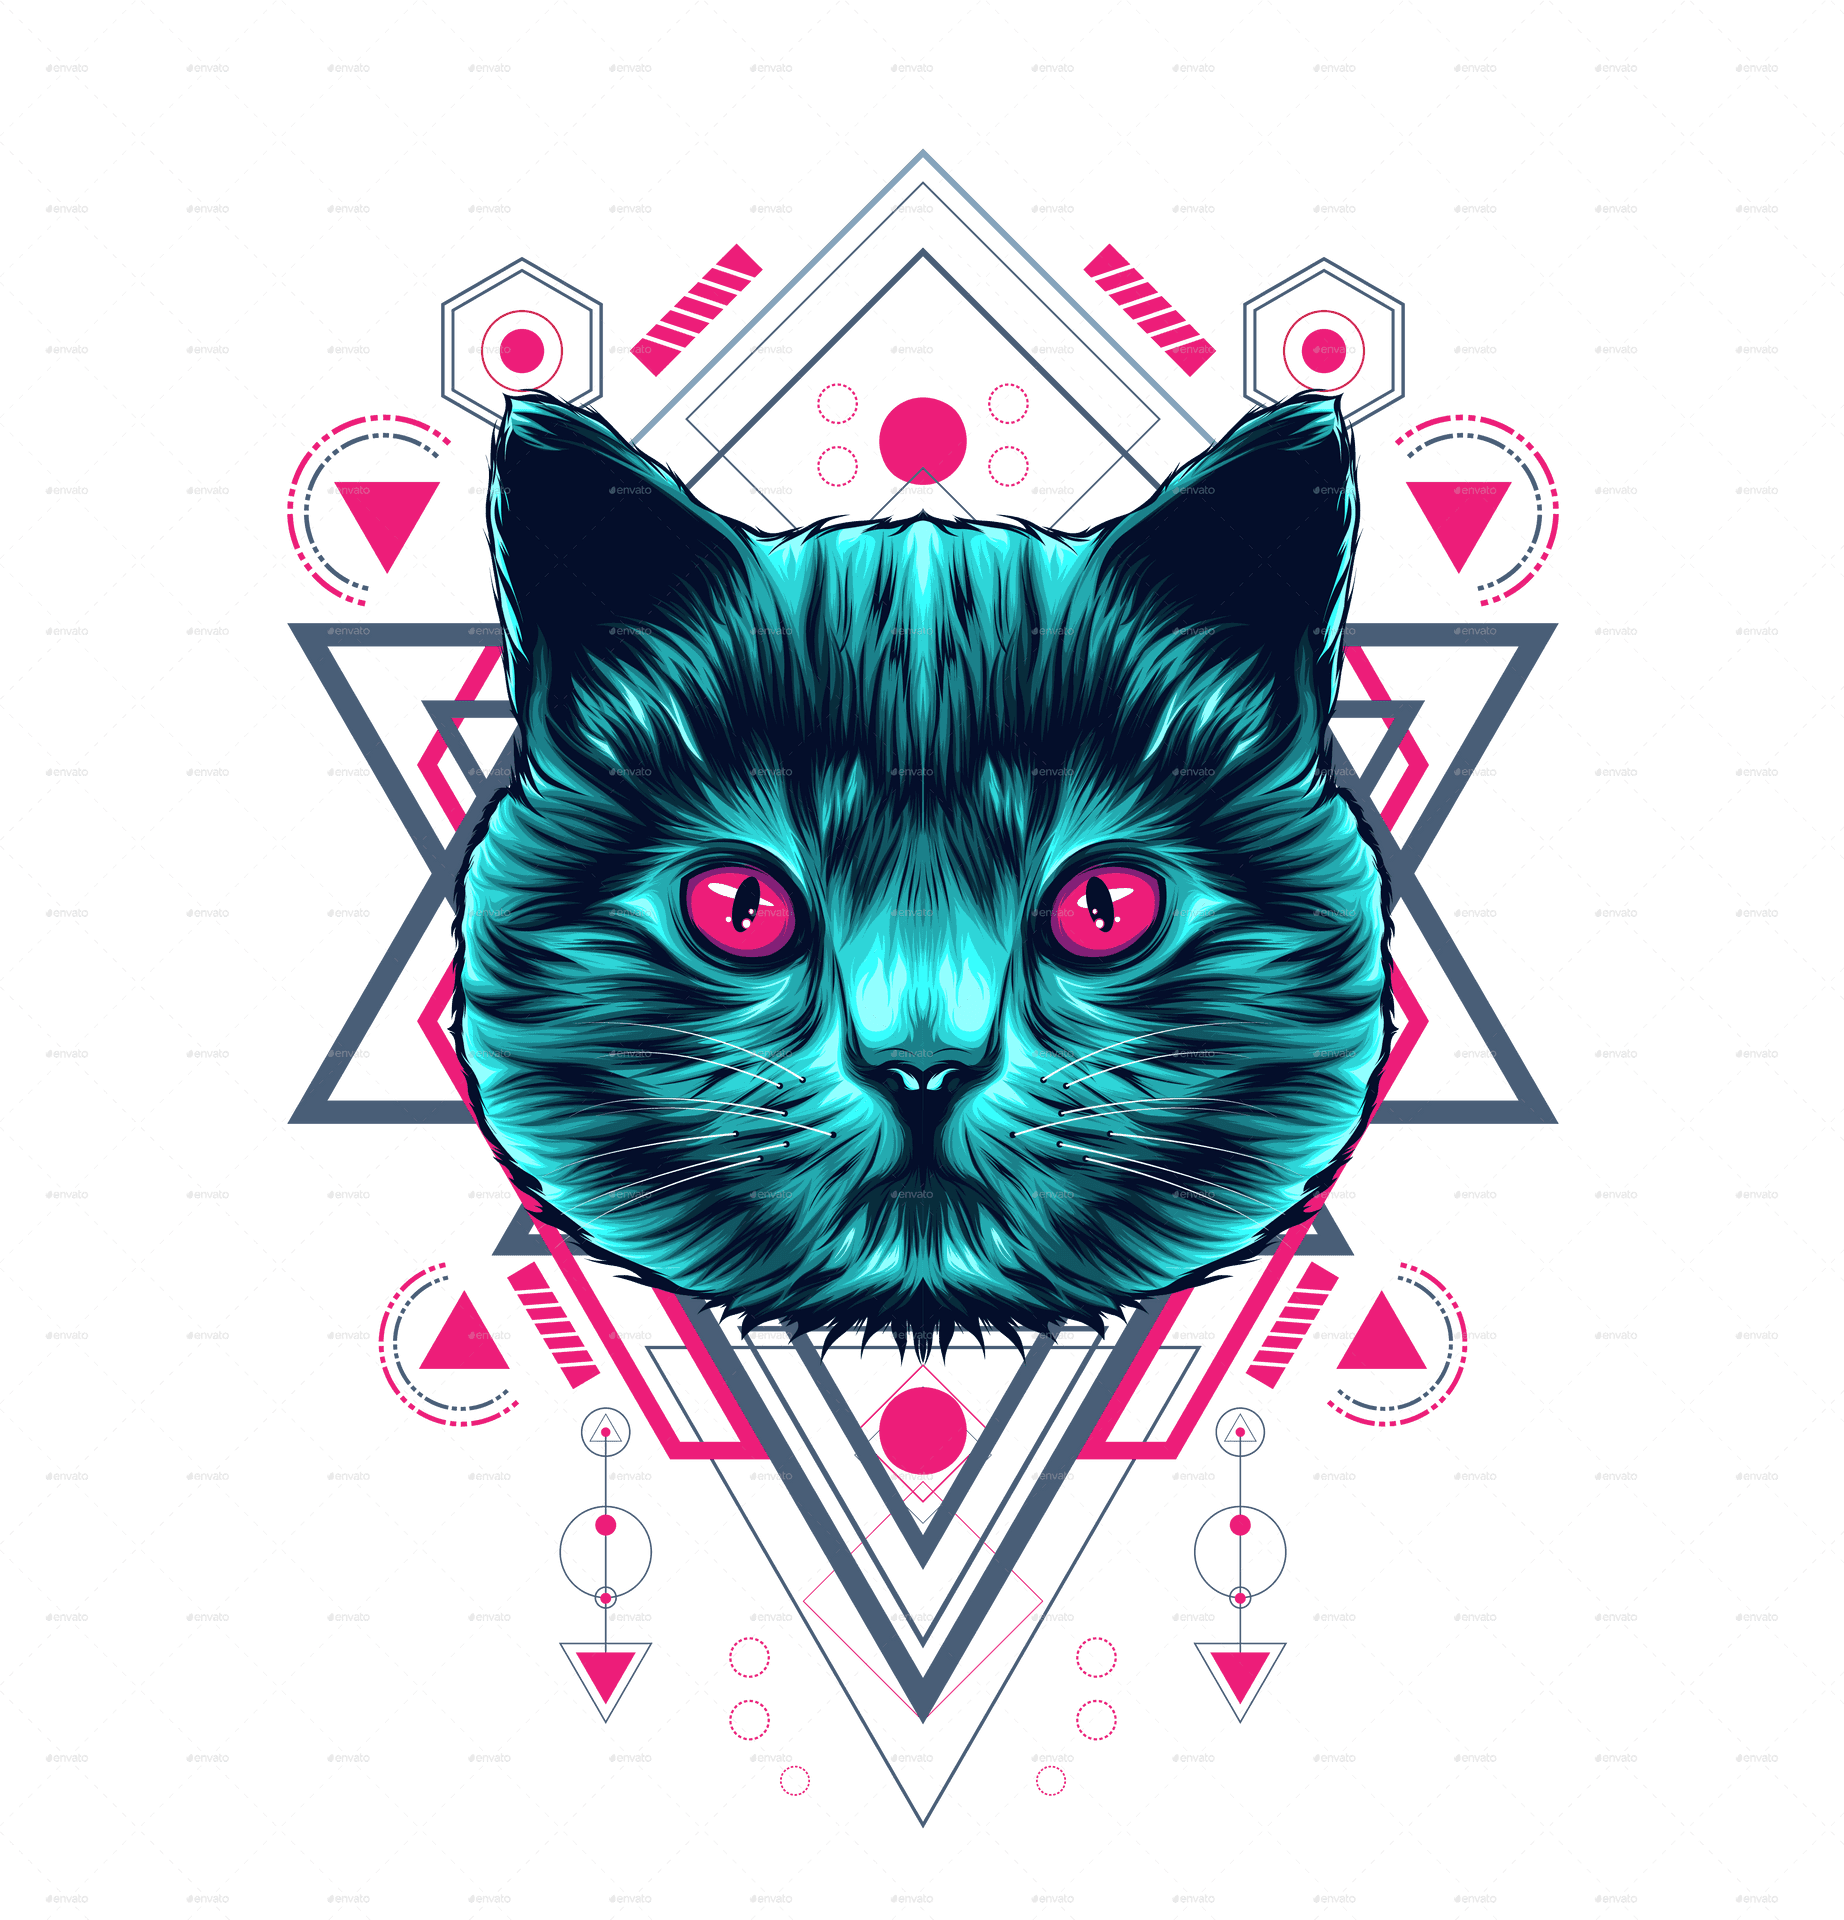 Mystical Cat Sacred Geometry Art PNG image